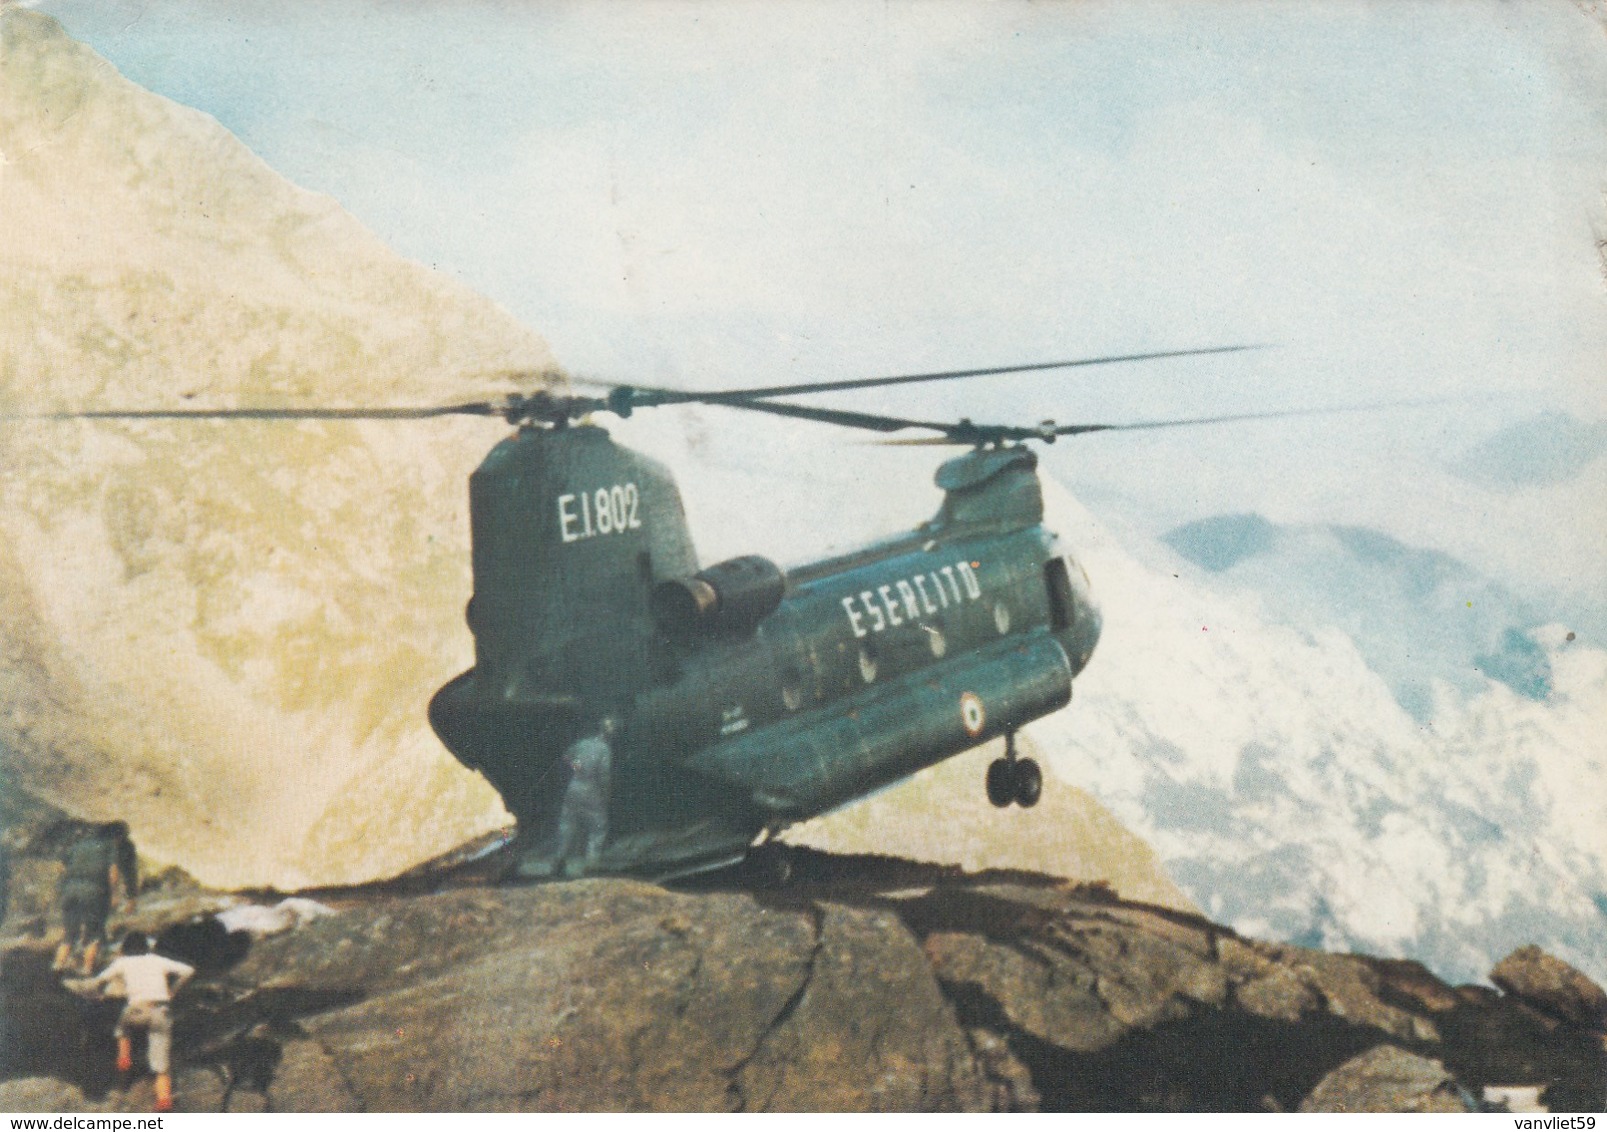 ELICOTTERO-HELICOPTER-HELICOPTERO-HUBSCHRAUBER-CH 47 C-CARTOLINA VERA FOTO VIAGGIATA IL 191-1979 - Hélicoptères